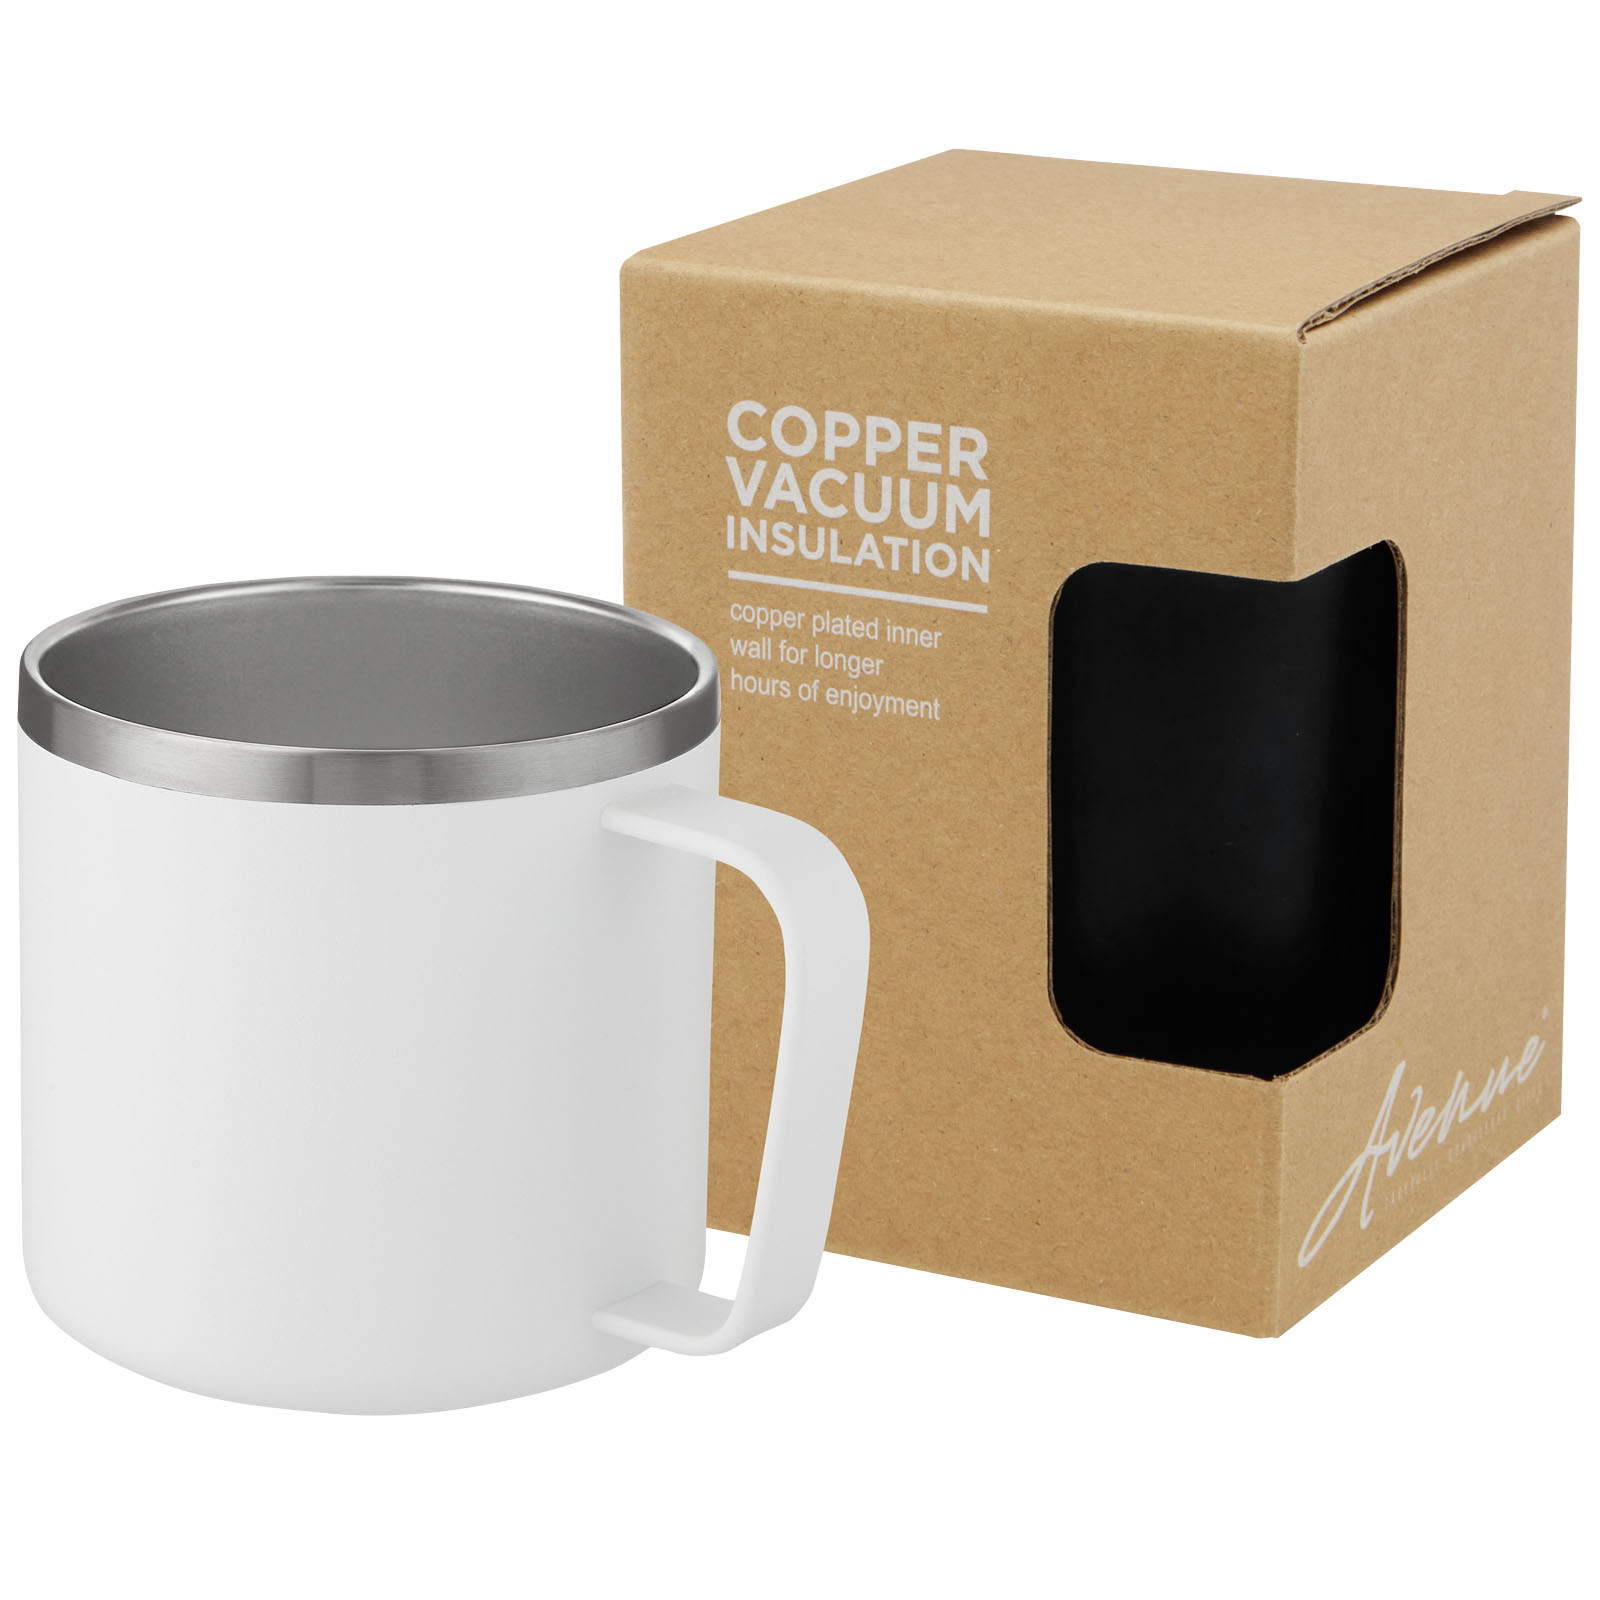 Advertising Insulated mugs - Nordre 350 ml copper vacuum insulated mug